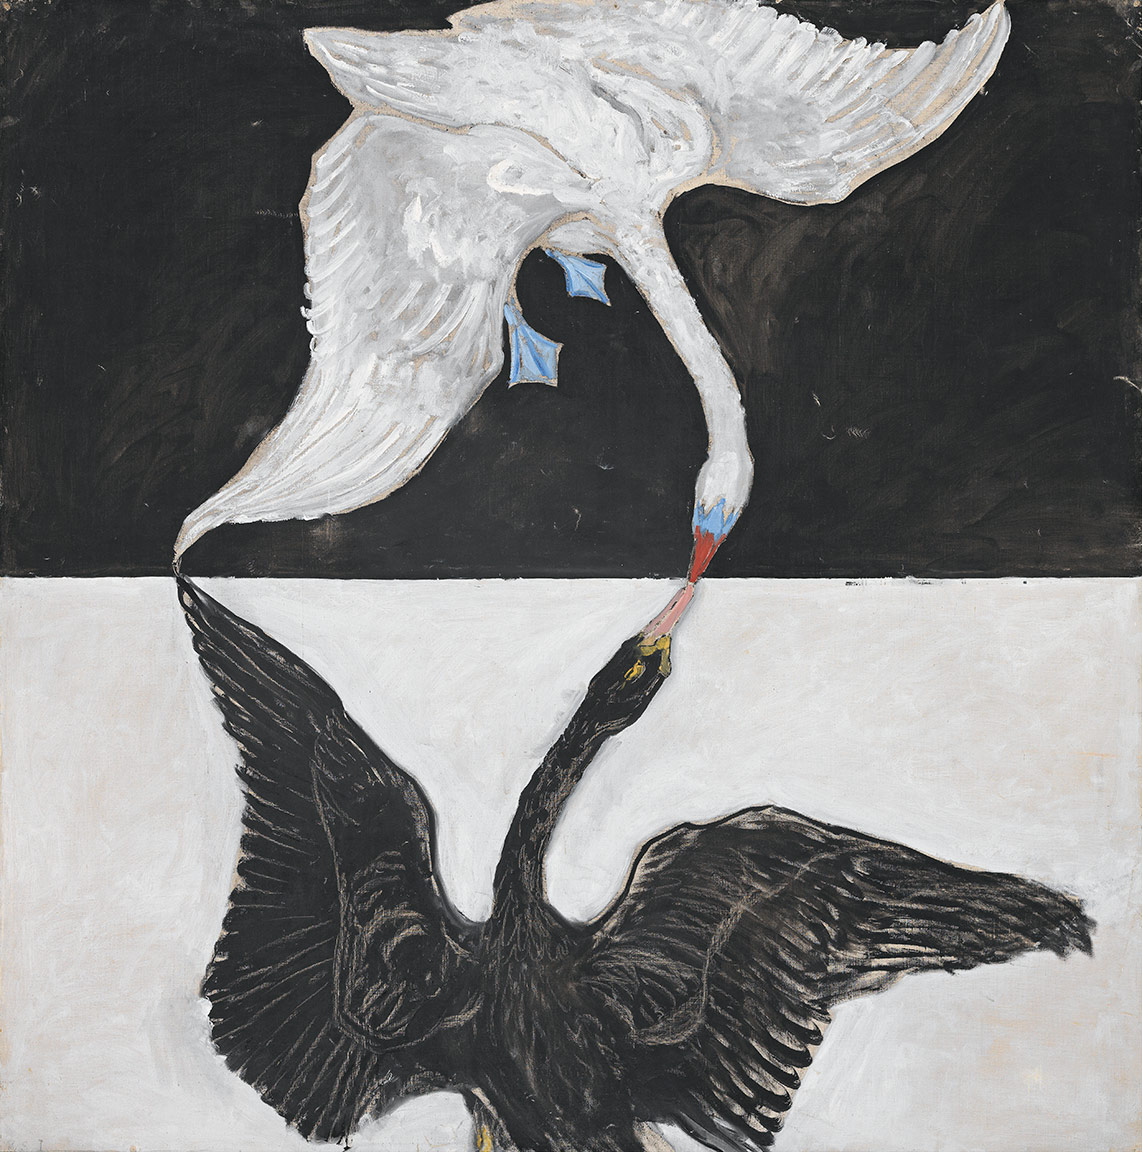 Group IX/SUW, The Swan, No. 1 (1915) by Hilma af Klint